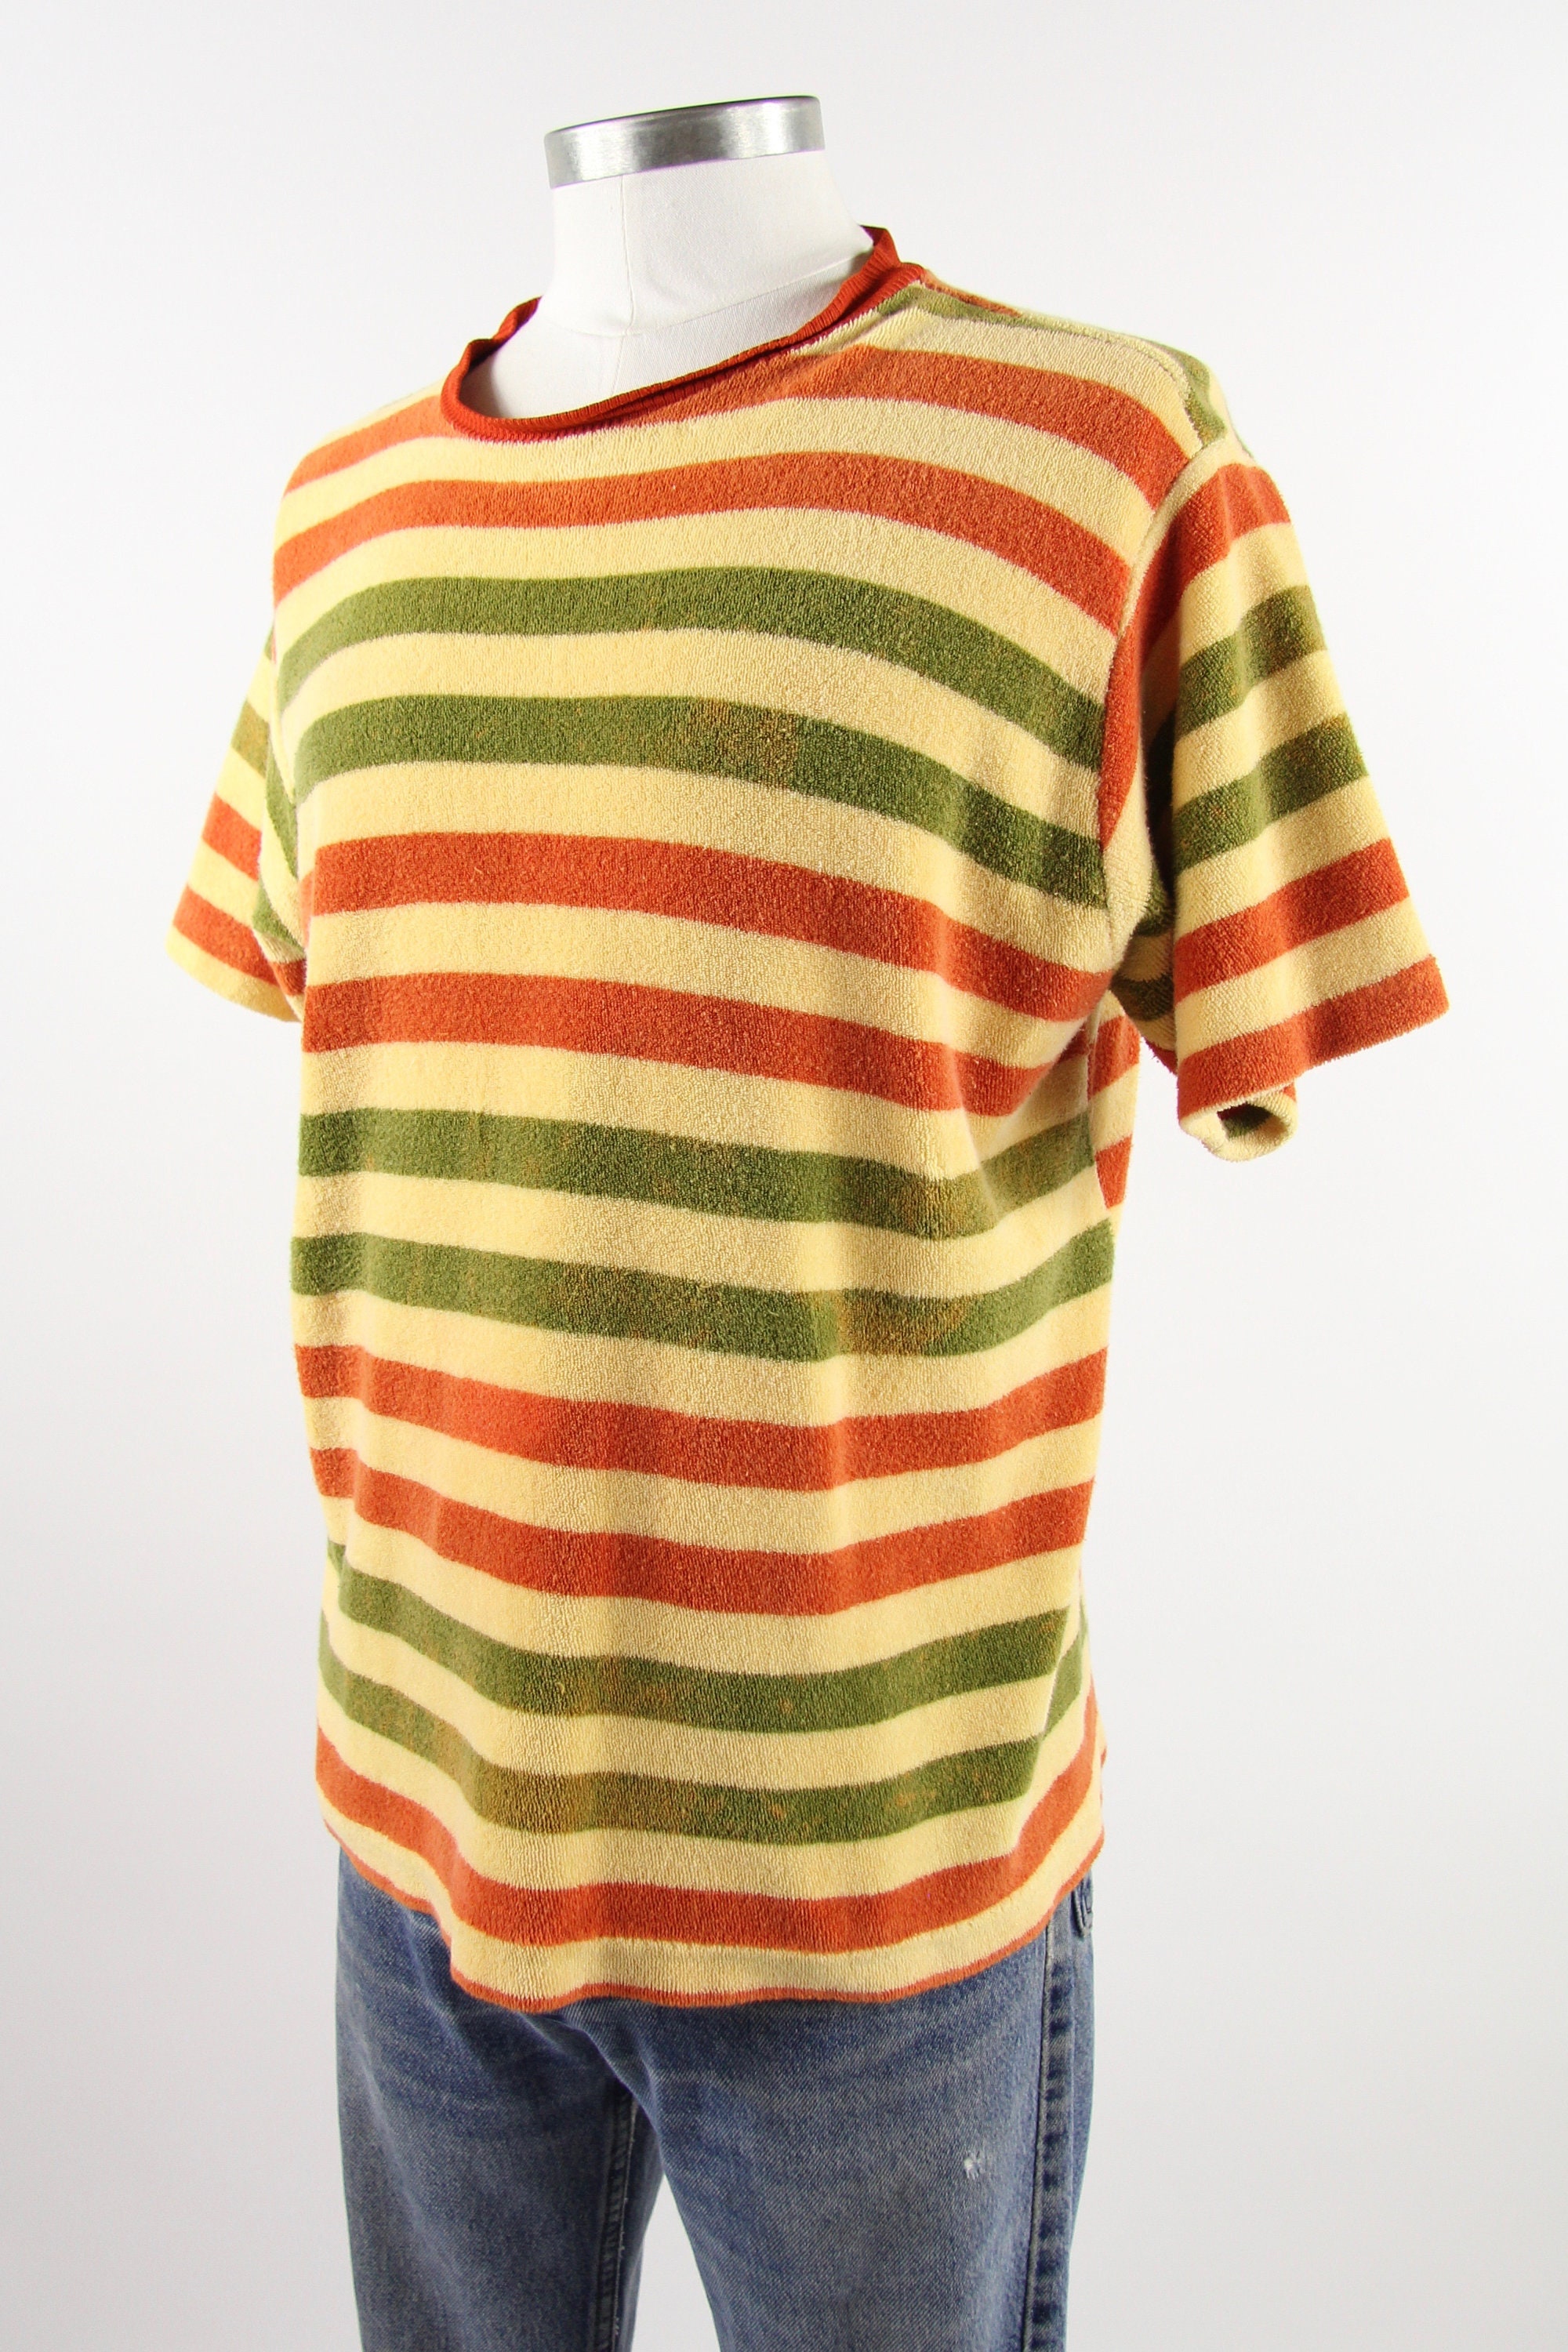 60's Striped Shirt Yellow Terry Cloth T-shirt Size Medium